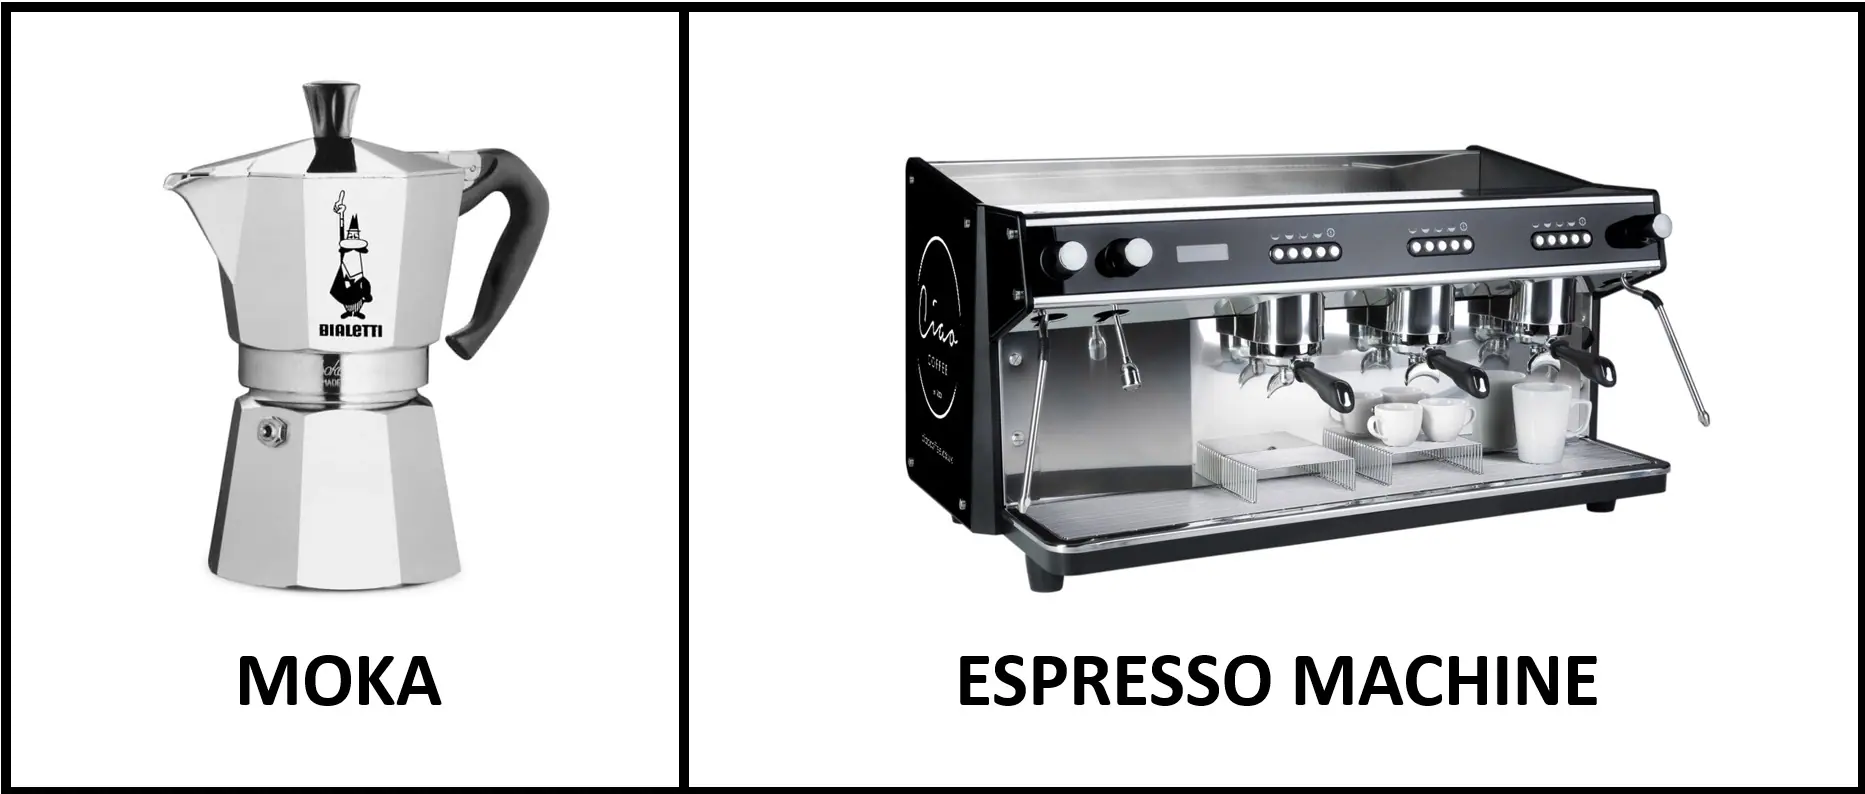 ESPRESSO MACHINE AND MOKA - WAYS ITALIANS MAKE COFFEE